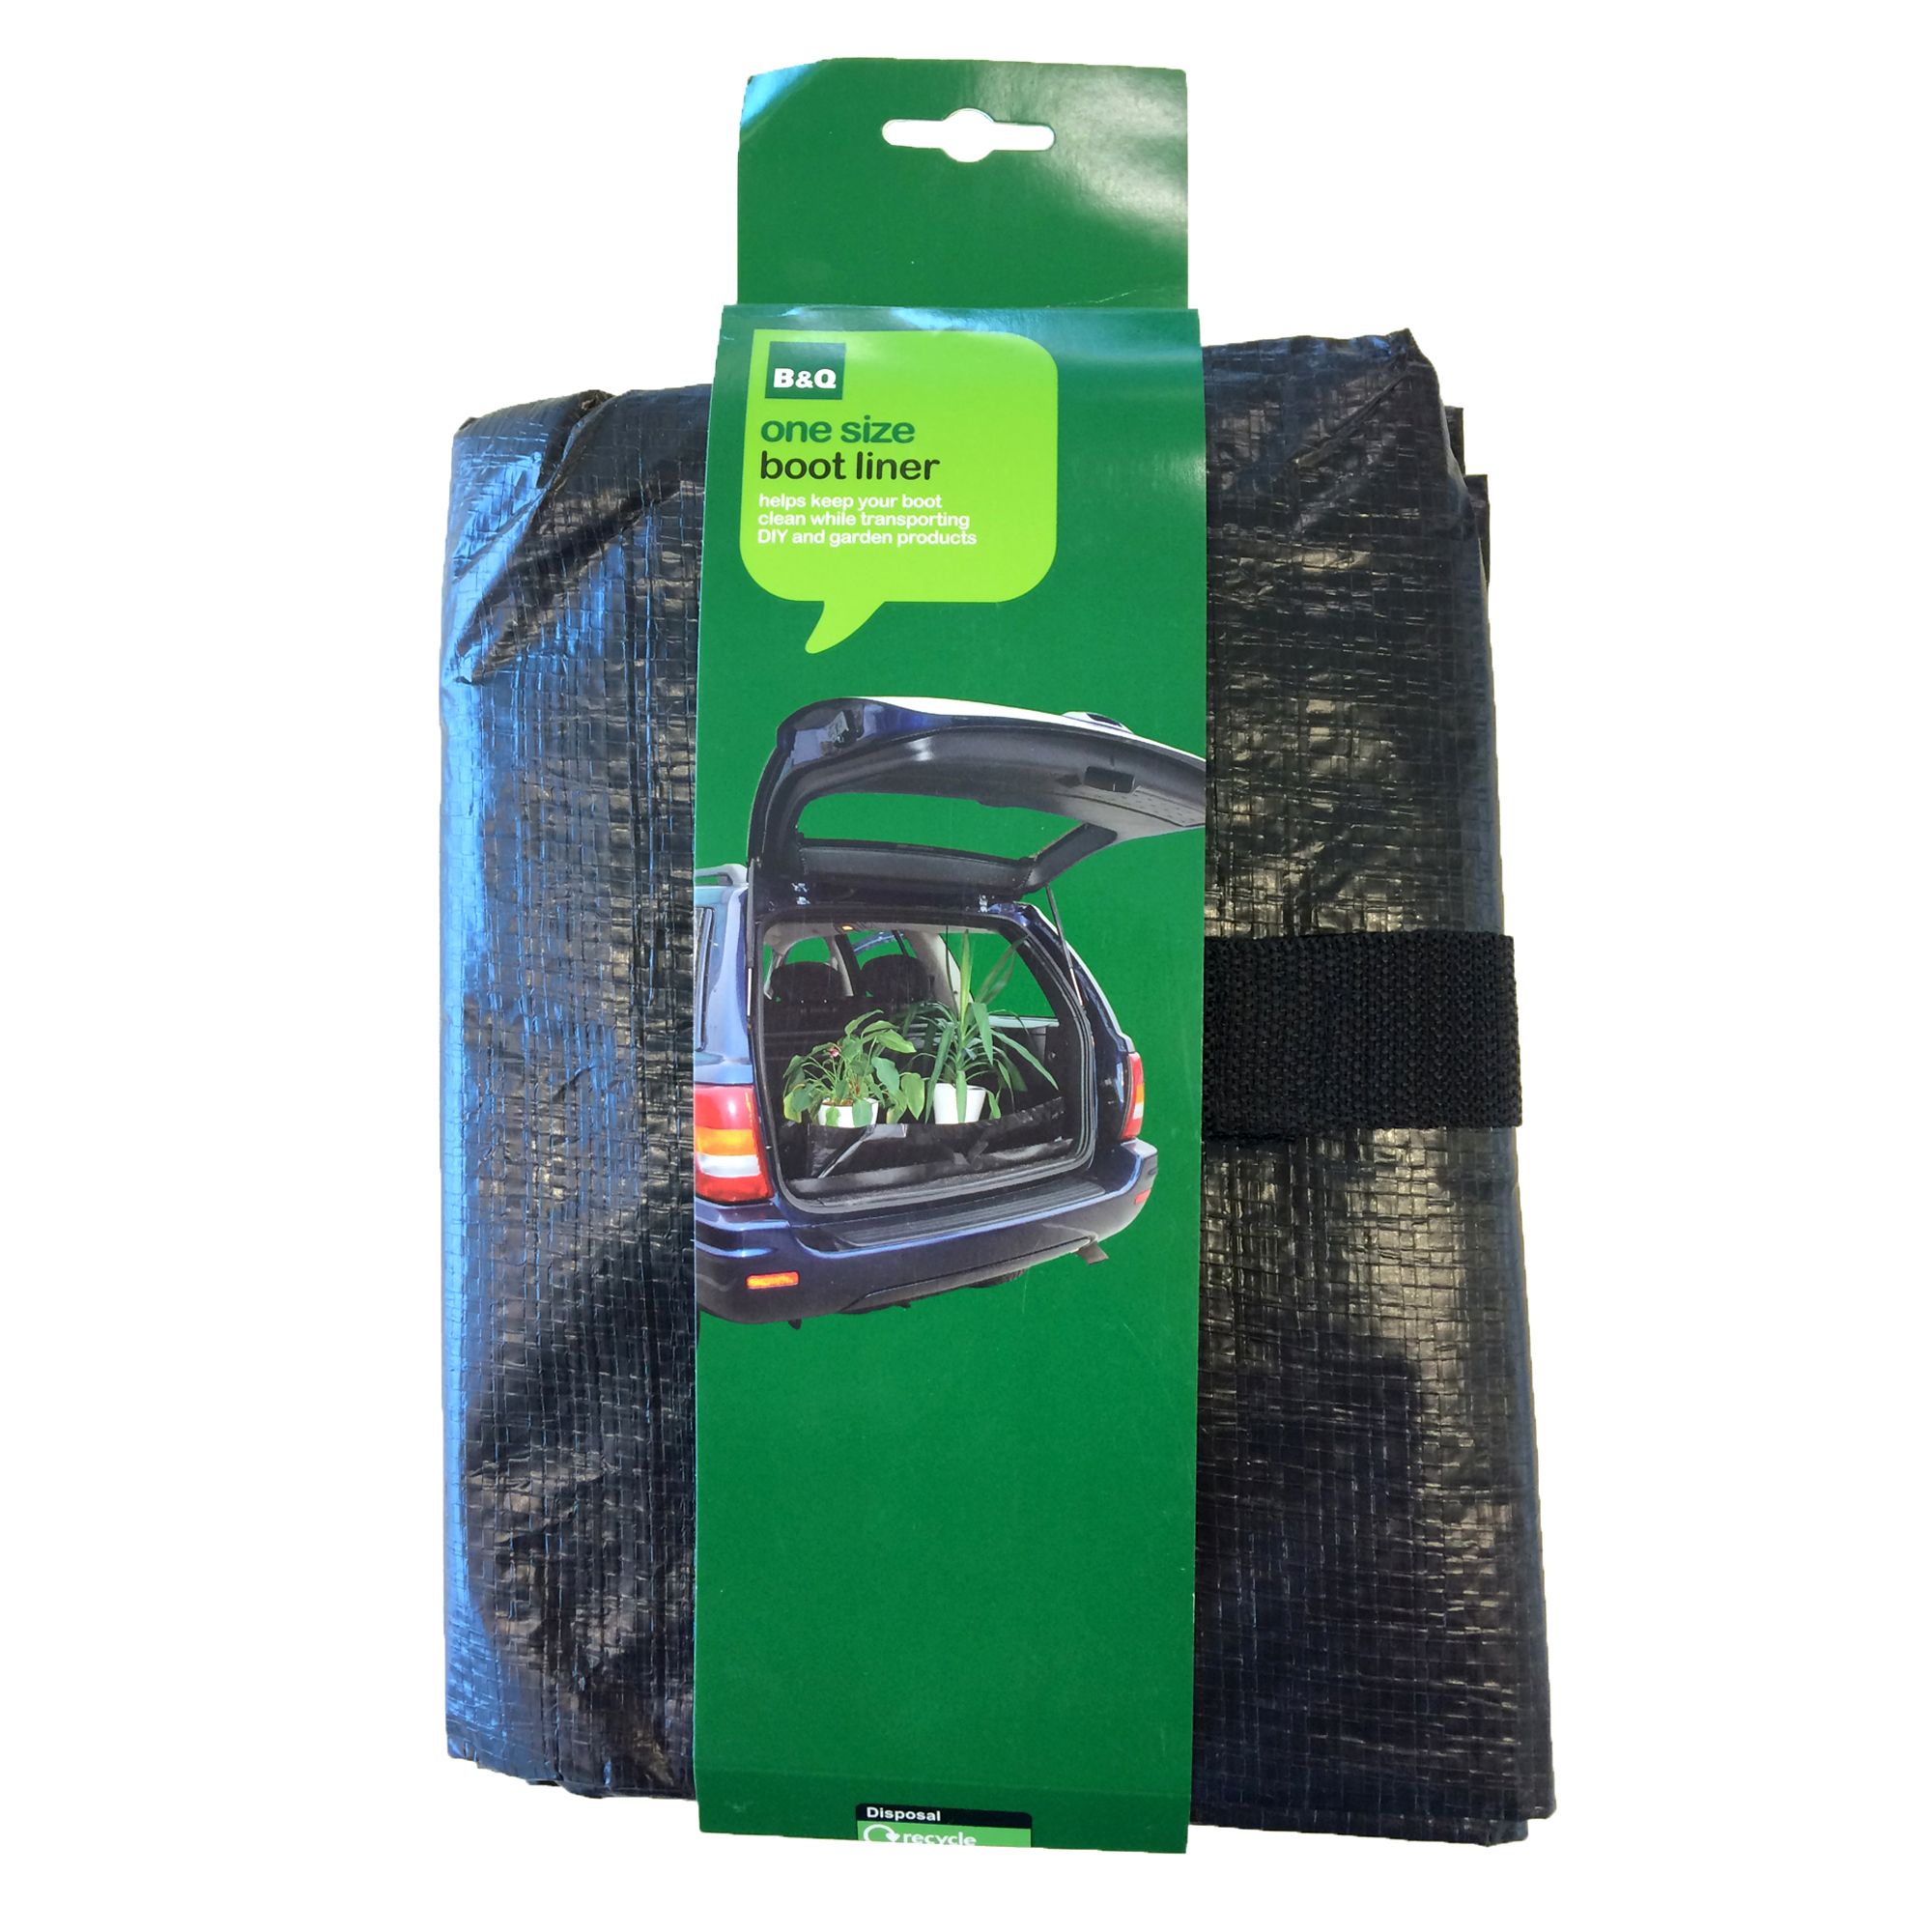 Black Plastic Car boot mat